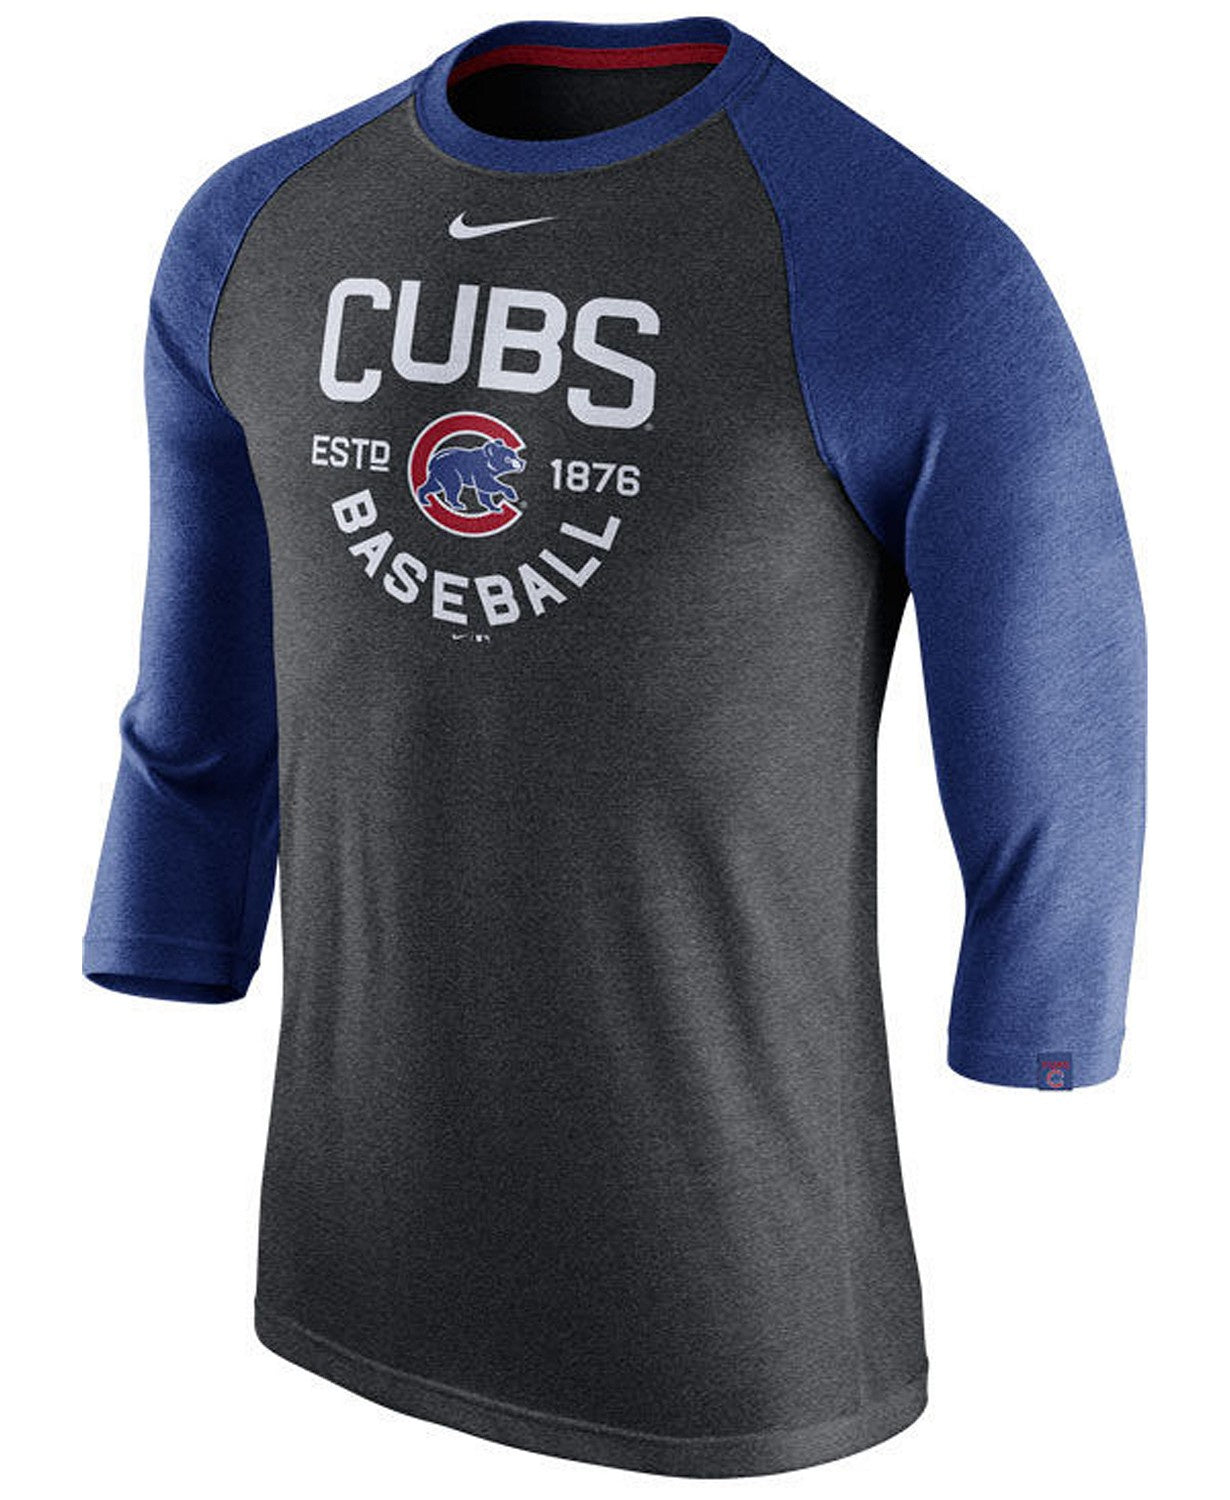 Nike Men's Chicago Cubs Triblend Three-Quarter Raglan T-Shirt